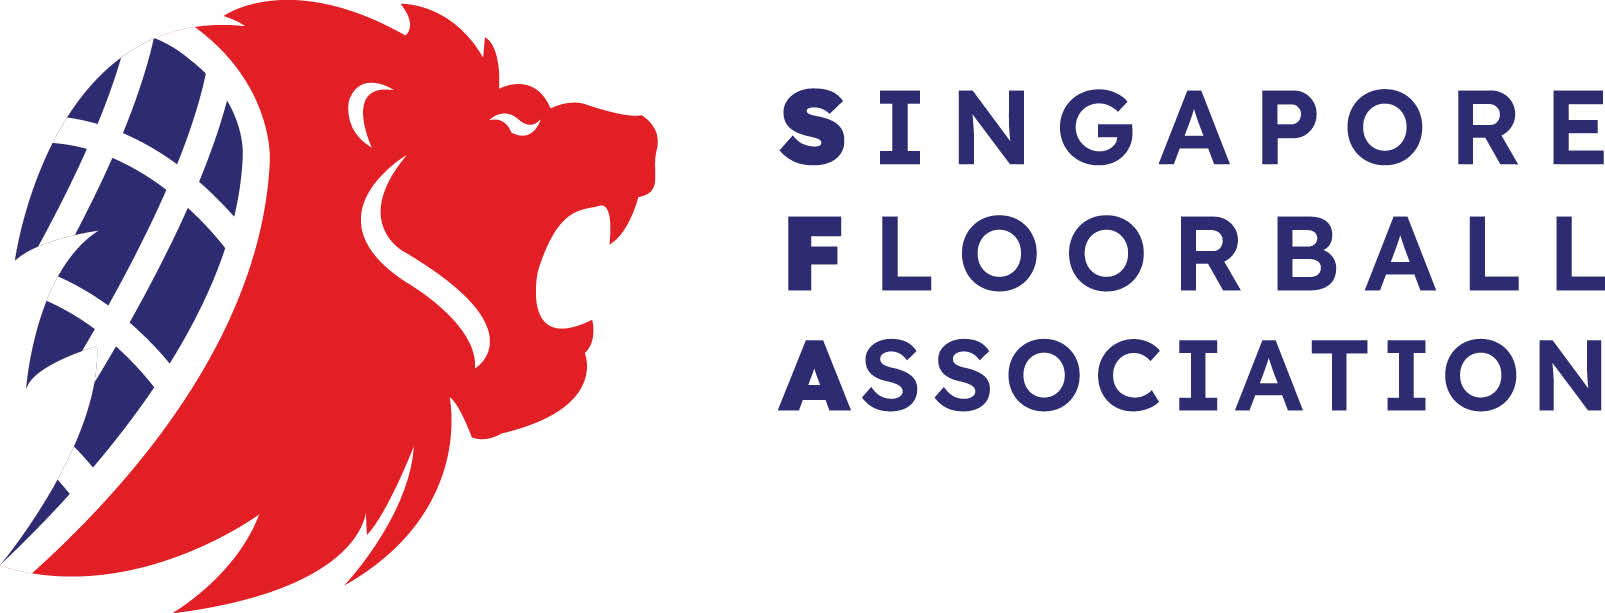 Singapore Floorball Association company logo